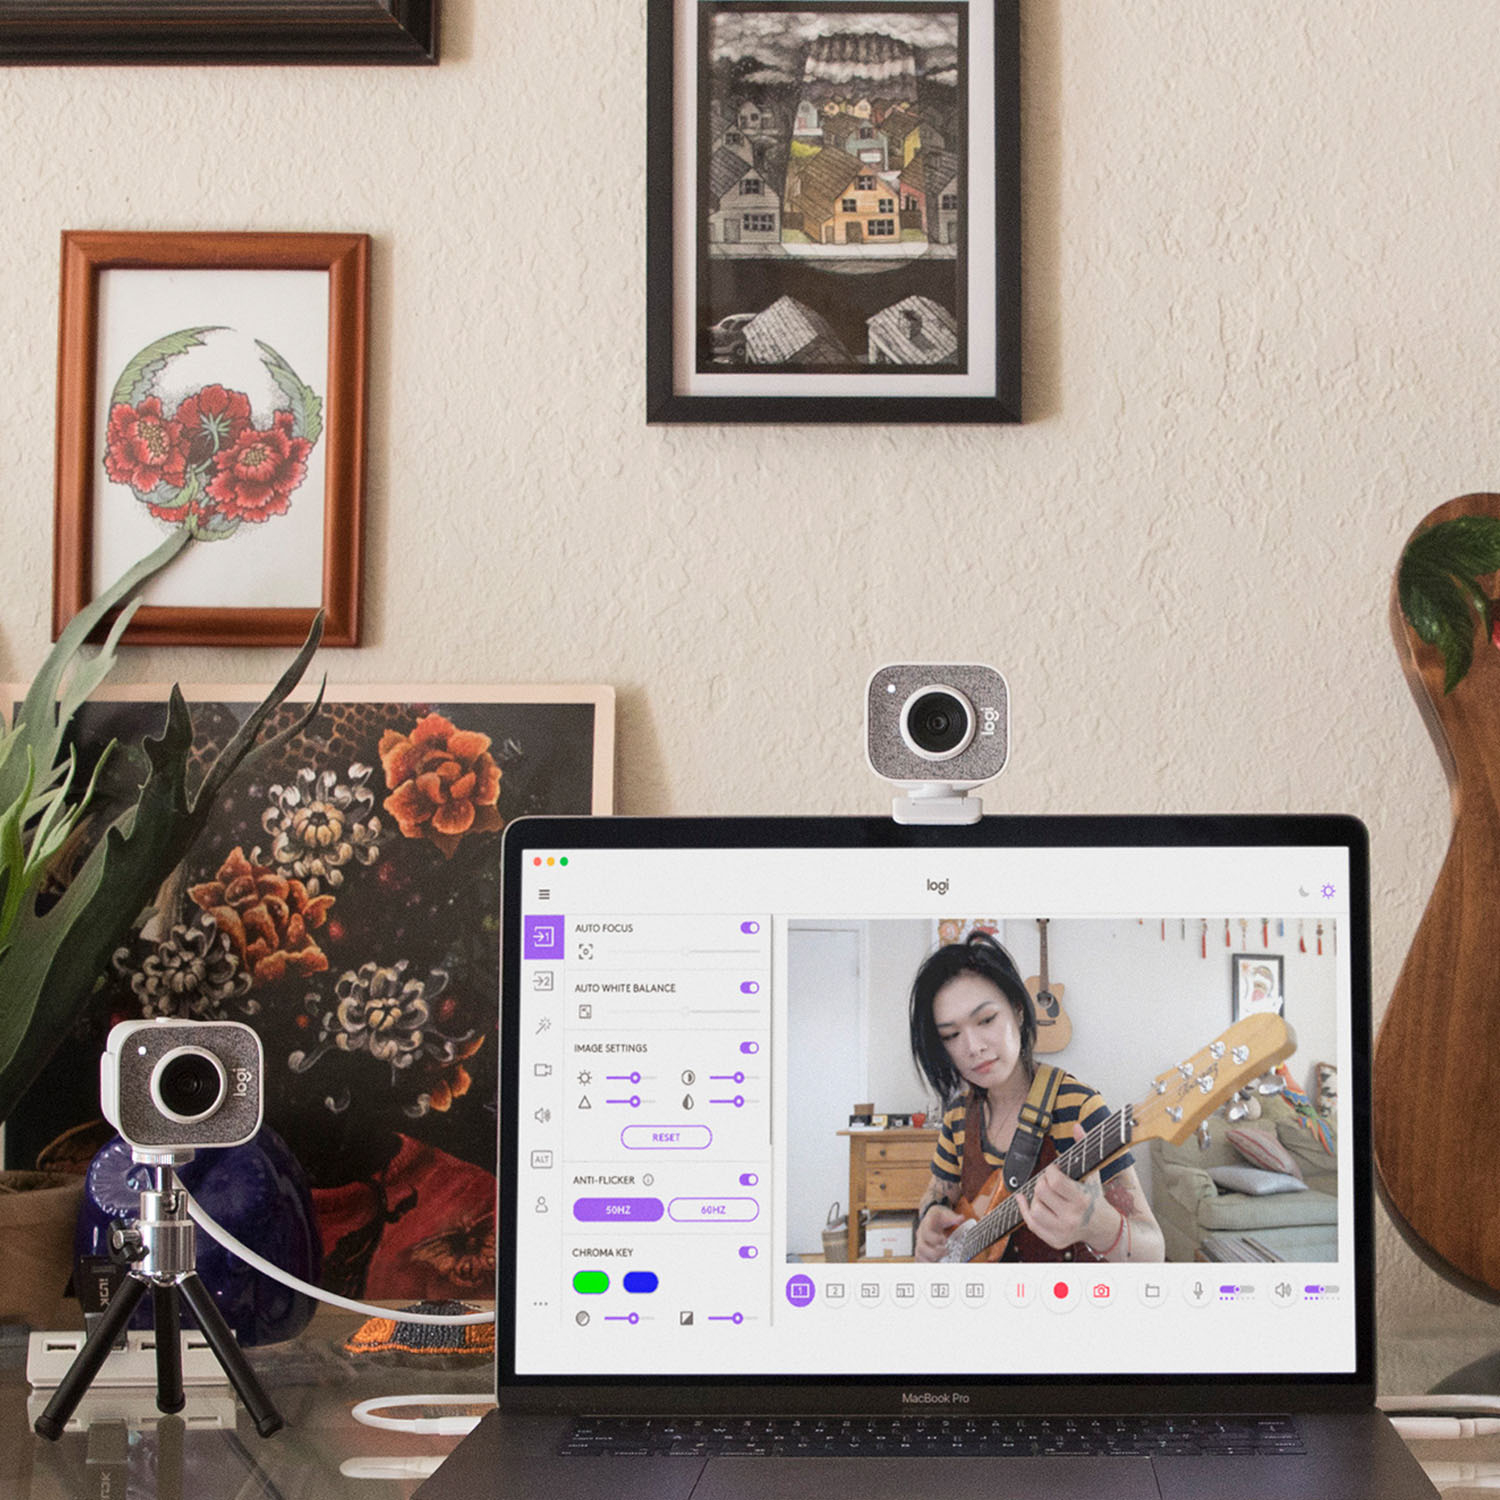  Logitech for Creators StreamCam Premium Webcam for Streaming  and Content Creation, Full HD 1080p 60 fps, Premium Glass Lens, Smart  Auto-Focus, for PC/Mac – Graphite : Electronics